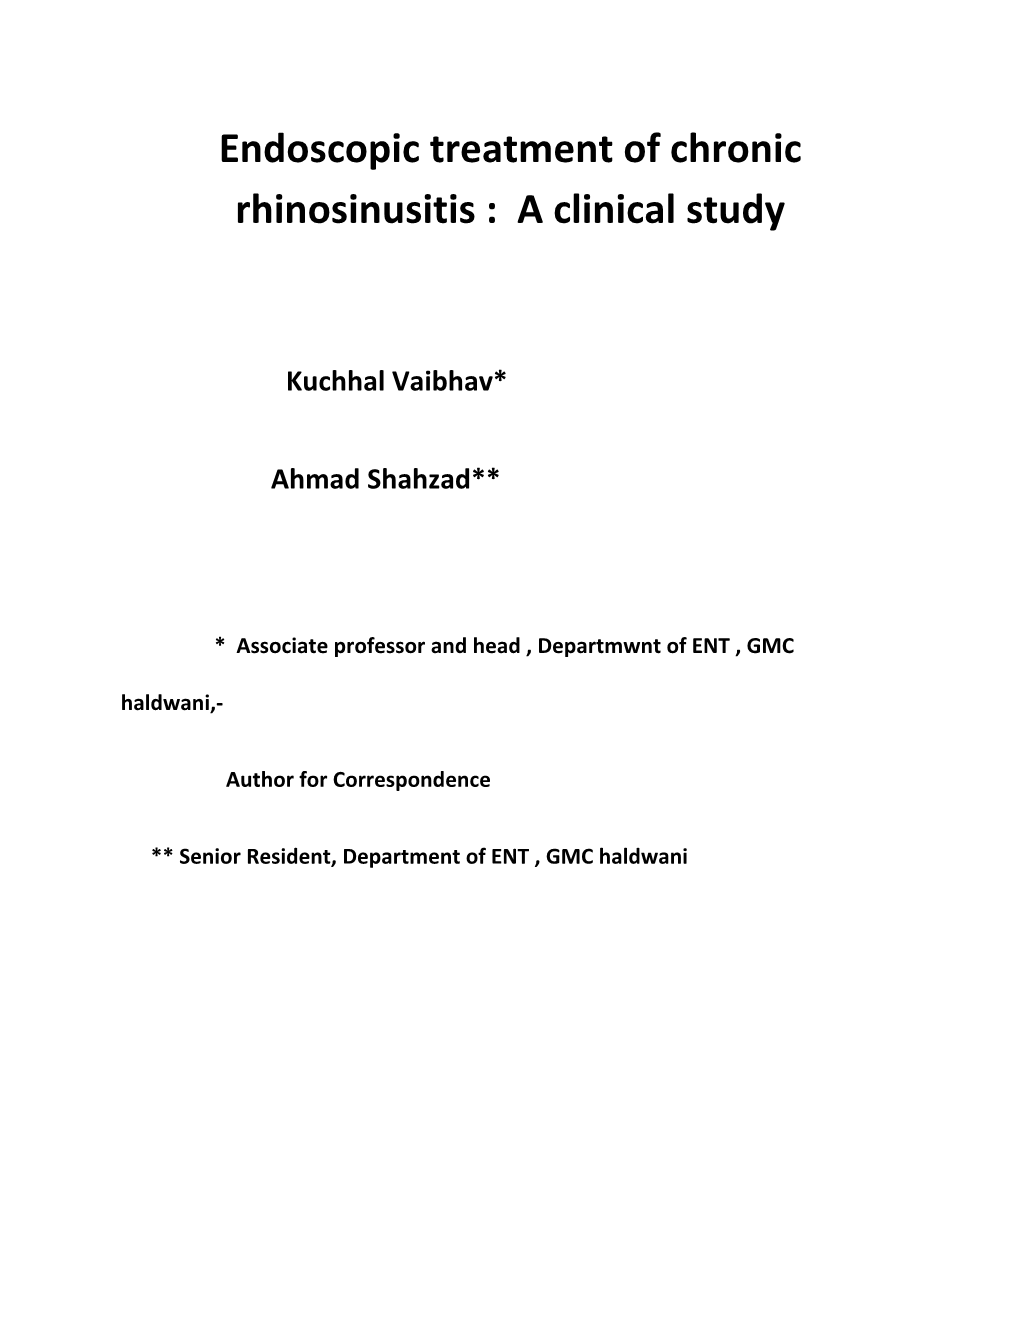 Endoscopic Treatment of Chronic Rhinosinusitis : a Clinical Study